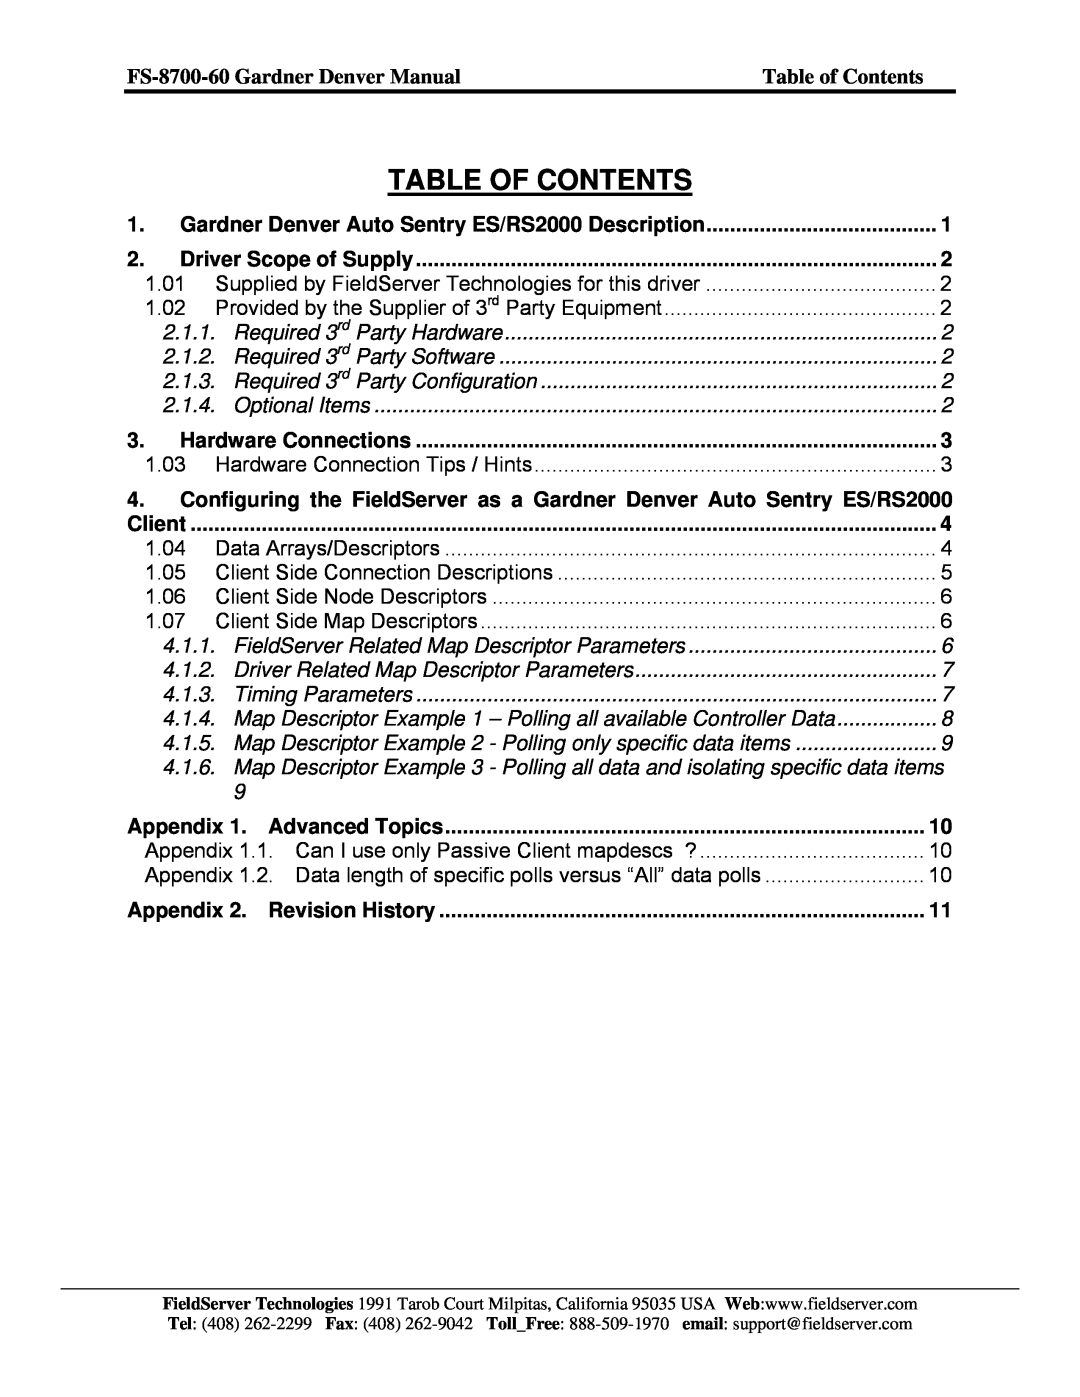 FieldServer FS-8700-60 Table Of Contents, Gardner Denver Auto Sentry ES/RS2000 Description, Driver Scope of Supply, Client 